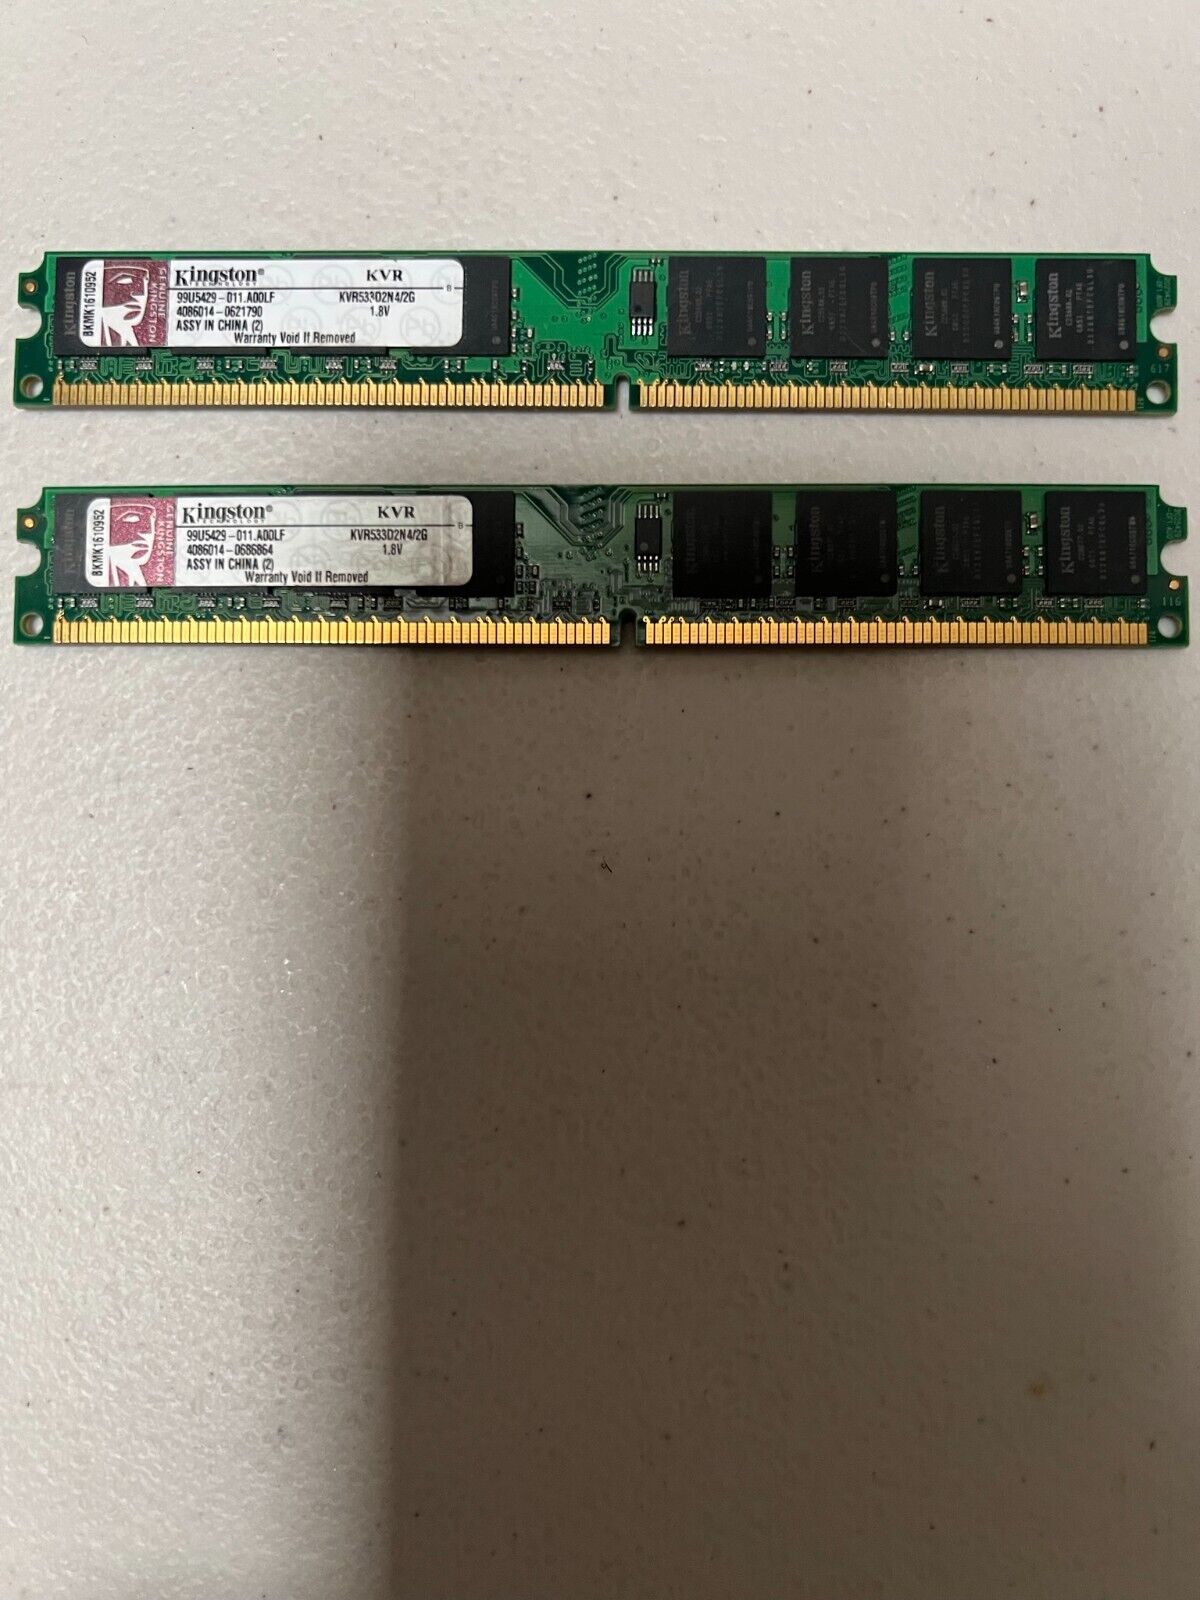 2 x Kingston 2GB x 2 = 4GB RAM   99U5429-011.ADOLF